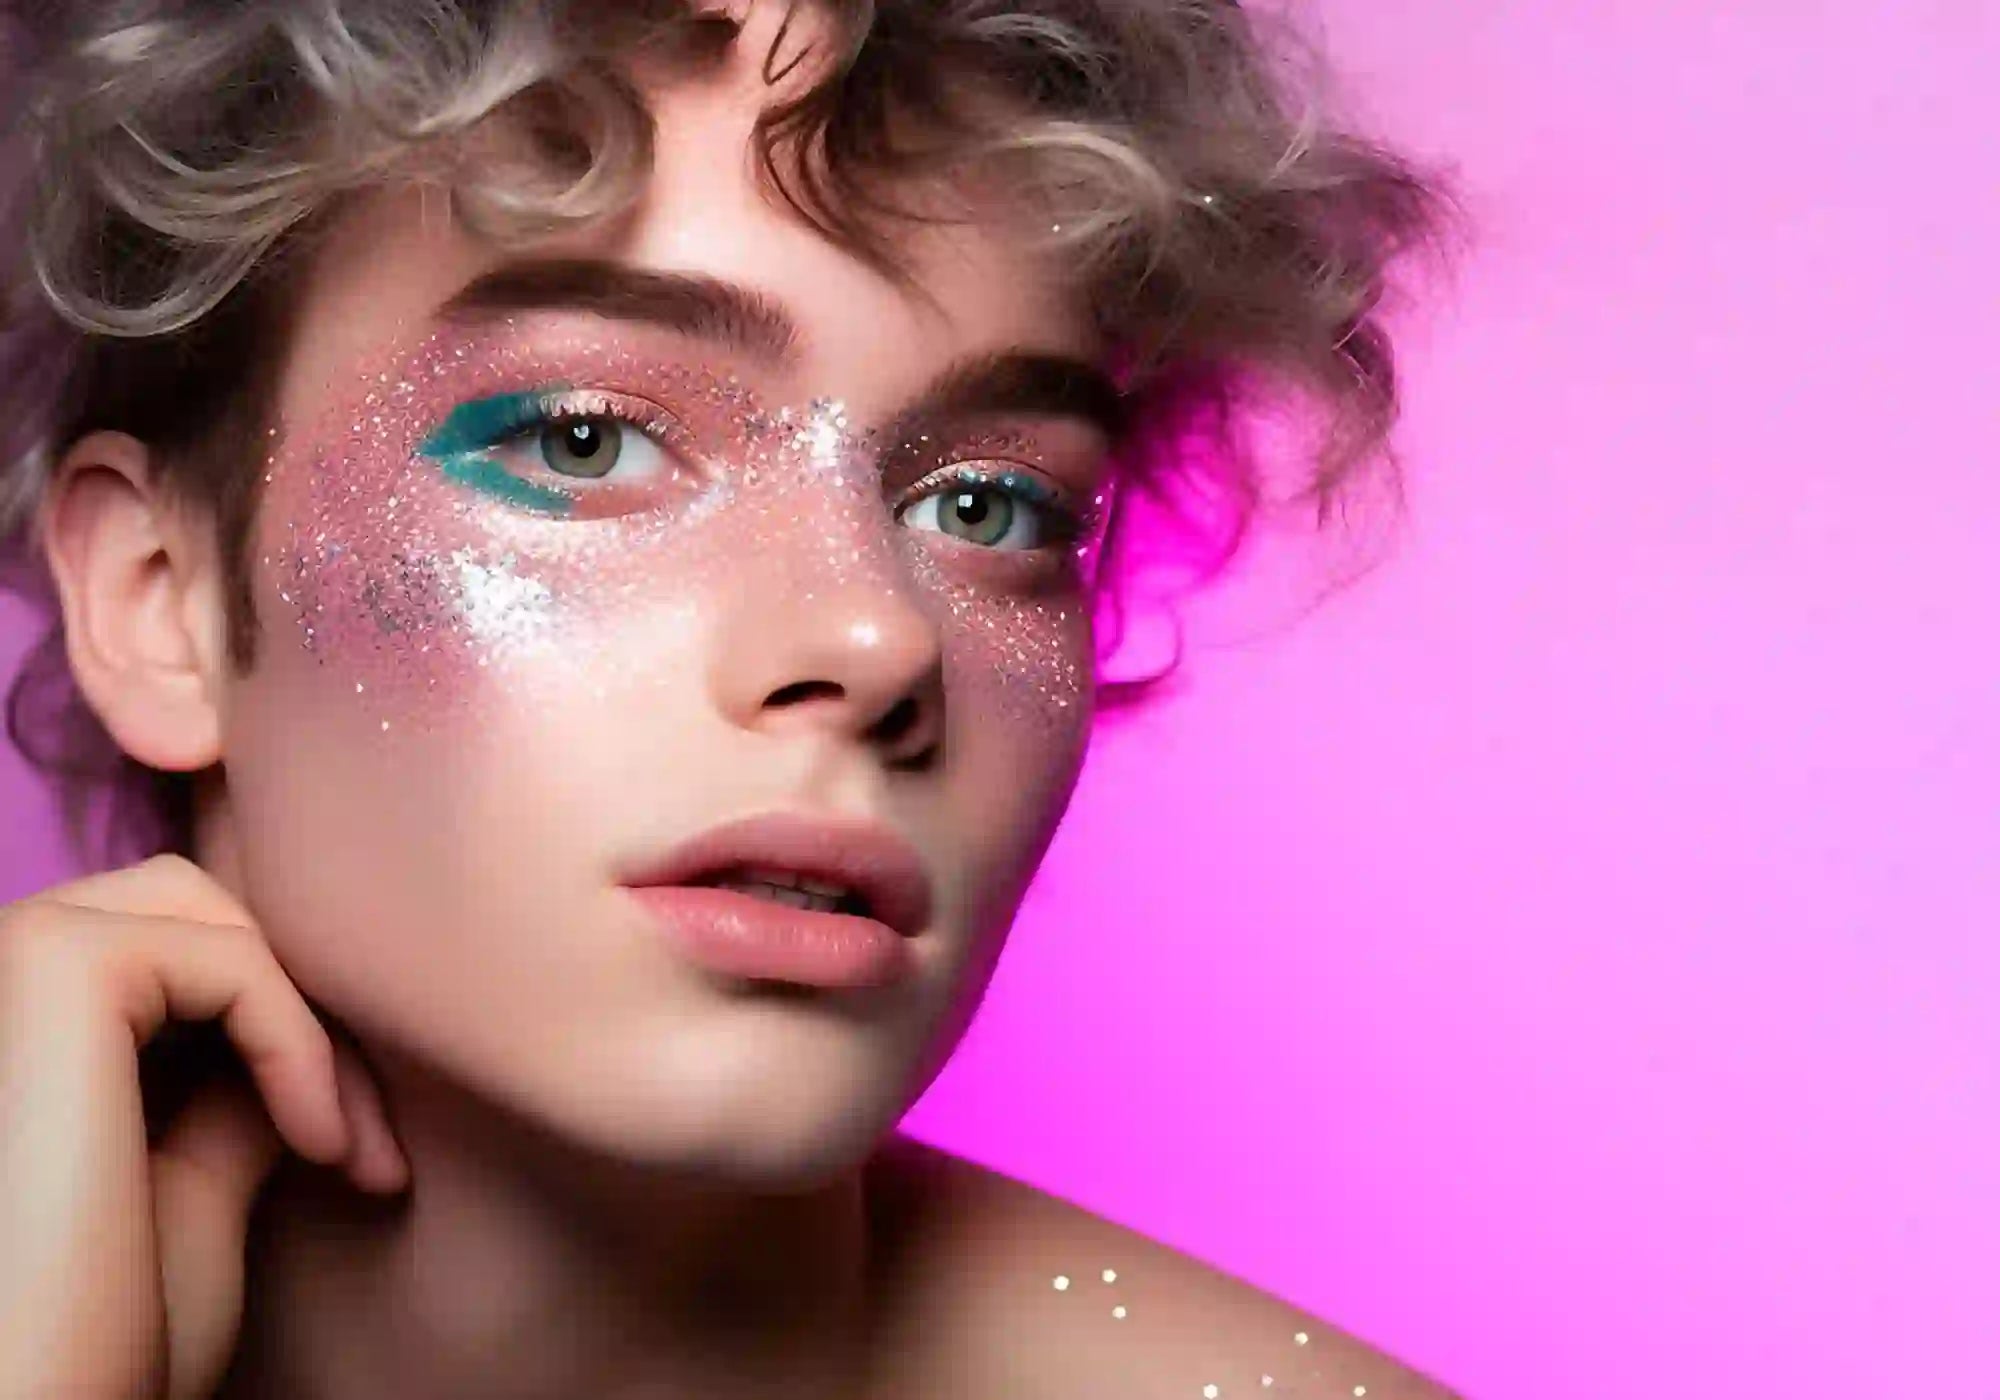 Stargazer Glitter makeup for face and body